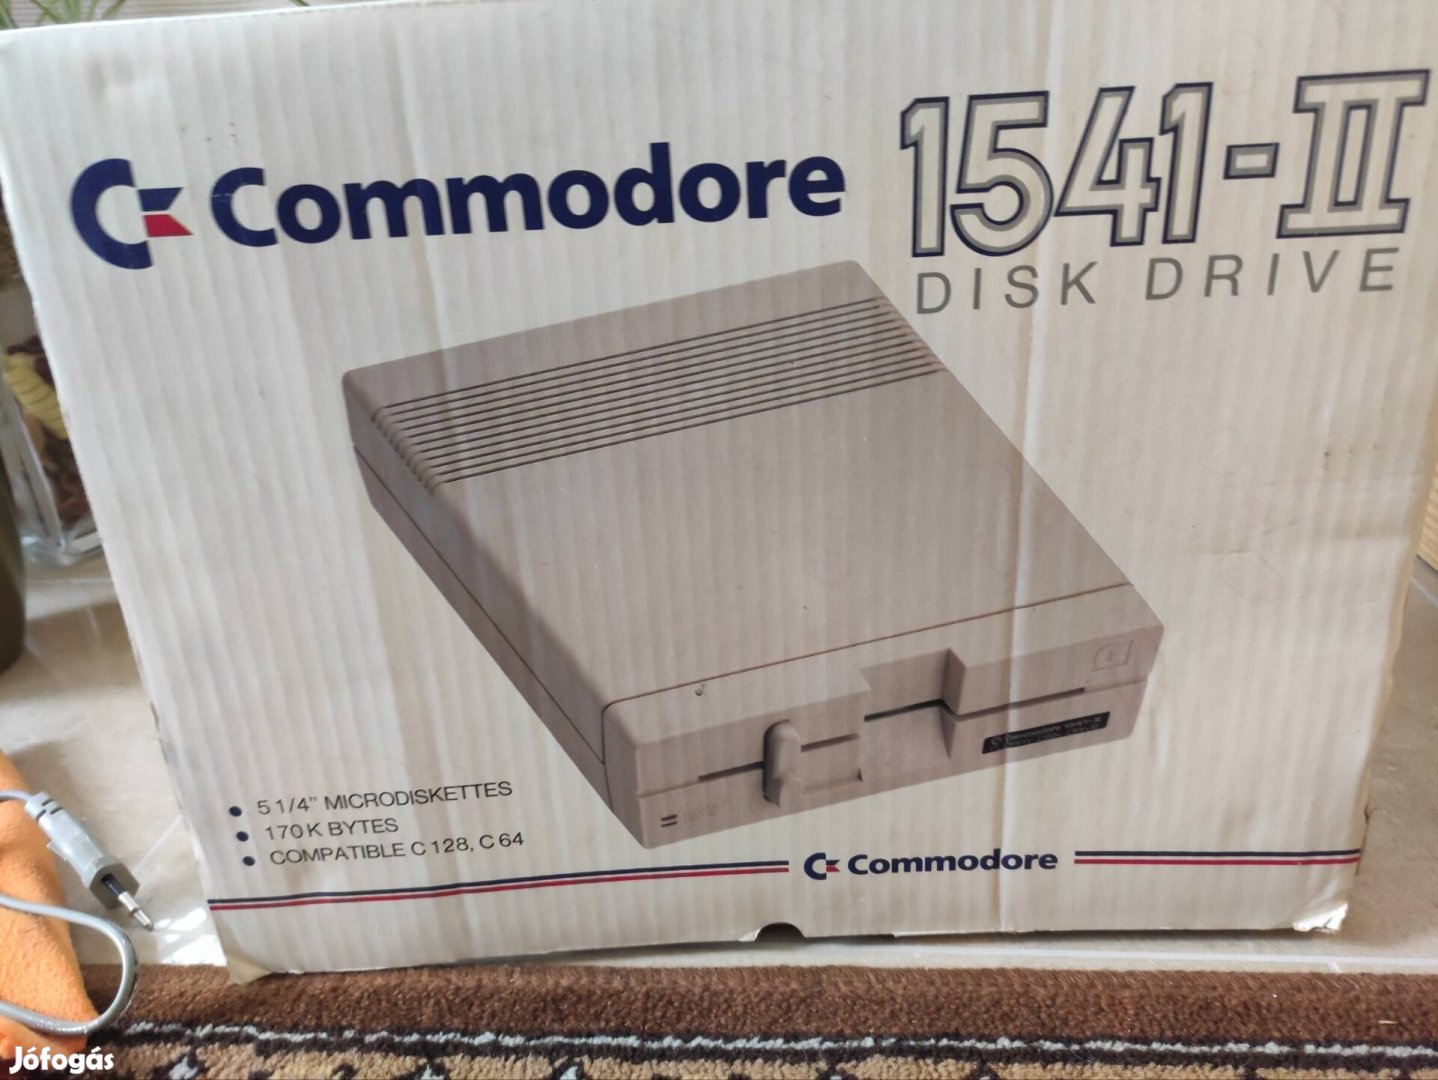 Commodor 1541-II Disk Drive 